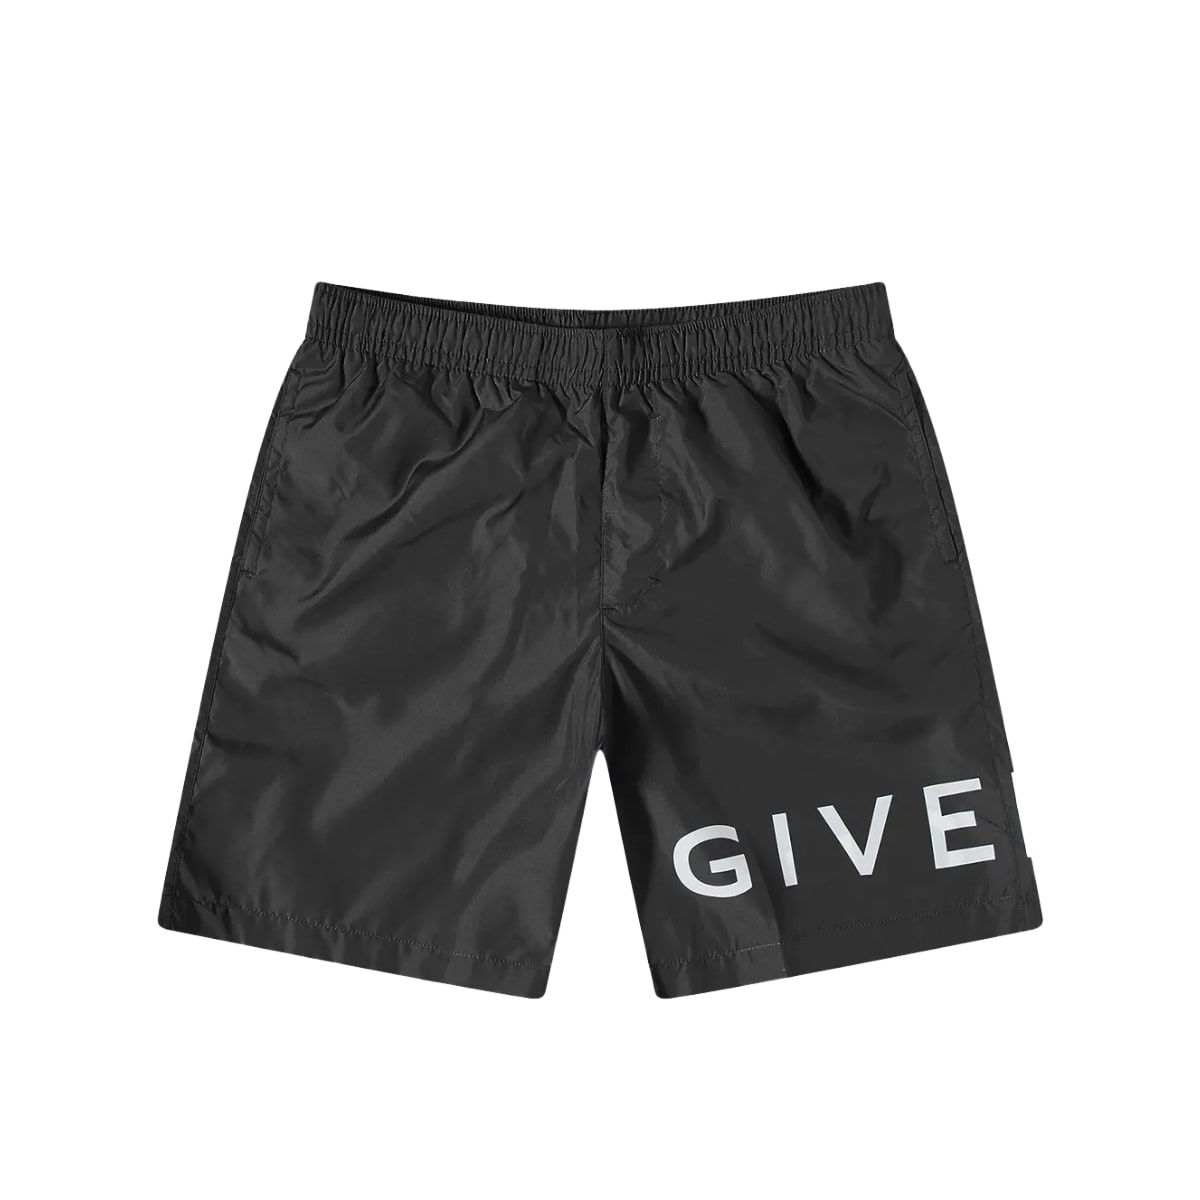 4G Long Swim Shorts in Recycled Nylon